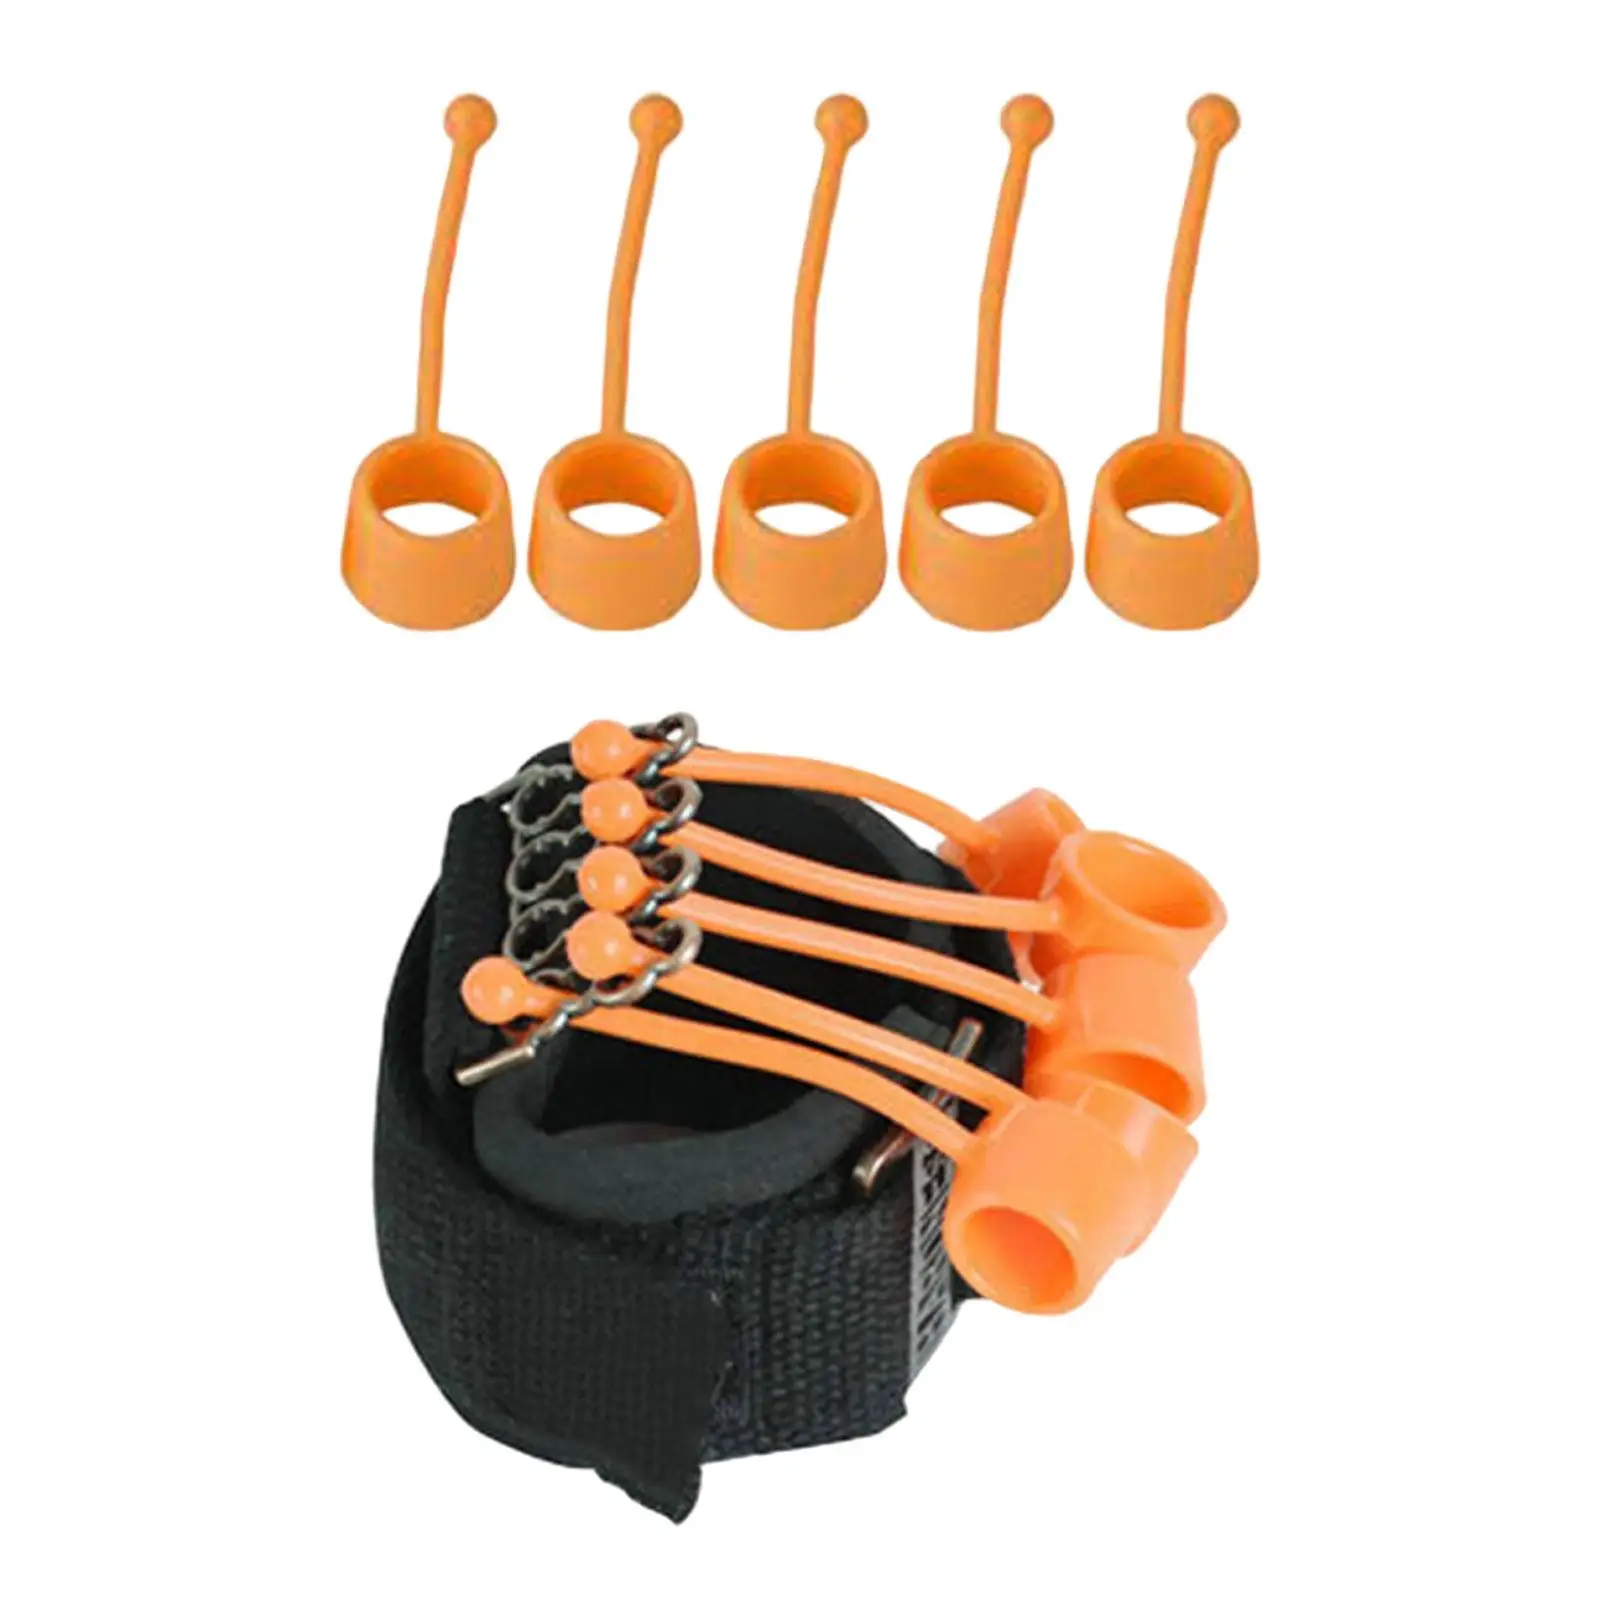 Finger Strengthener Flexible Silicone Finger Cot Hand Extensor Grip Trainer for Sports Athletes Tennis Player Women Men